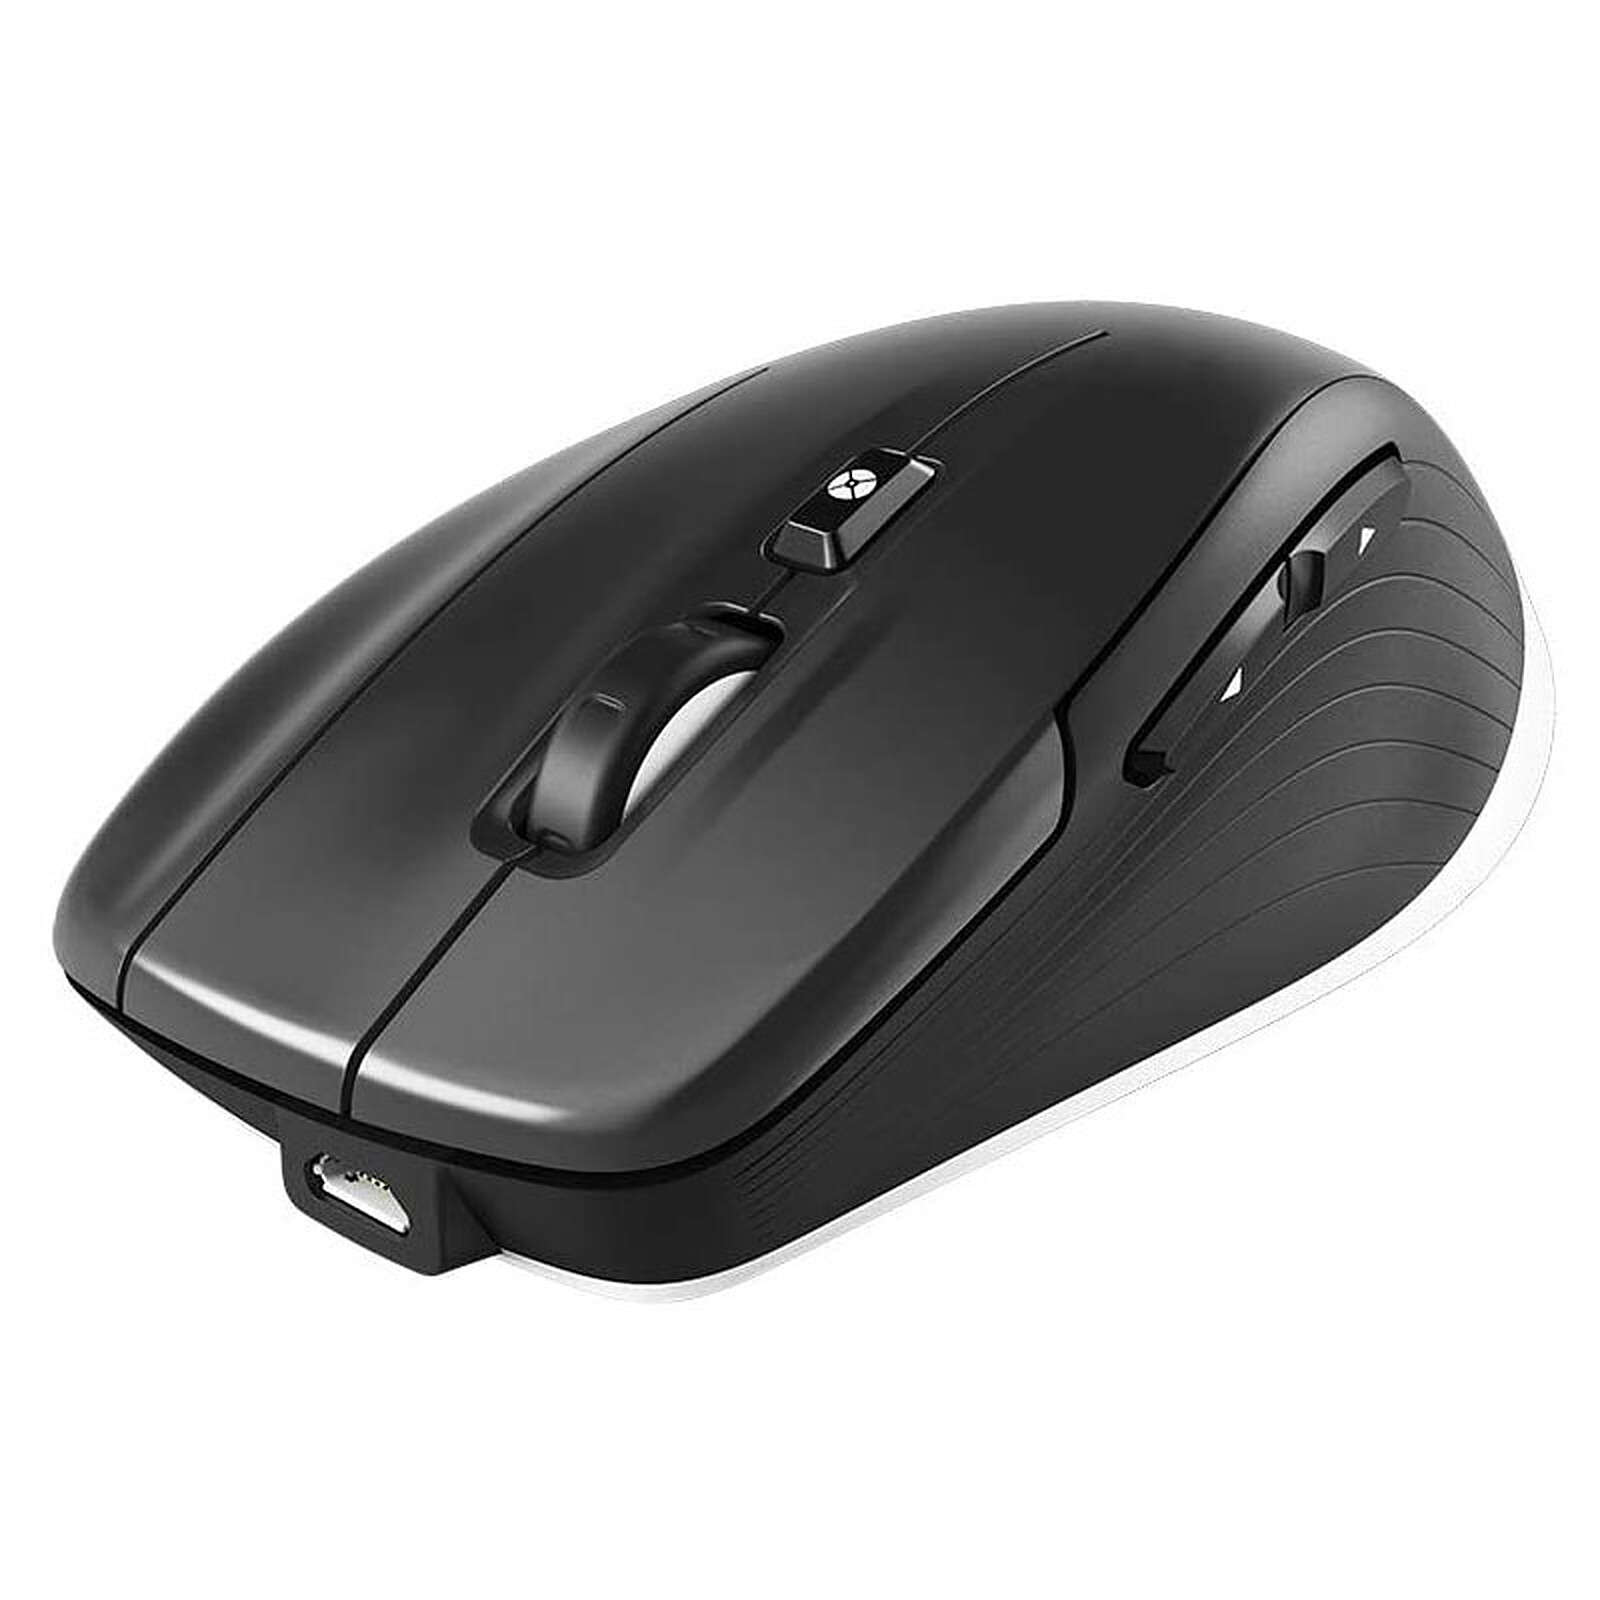 Mouse ergonomico senza fili Mobility Lab Premium